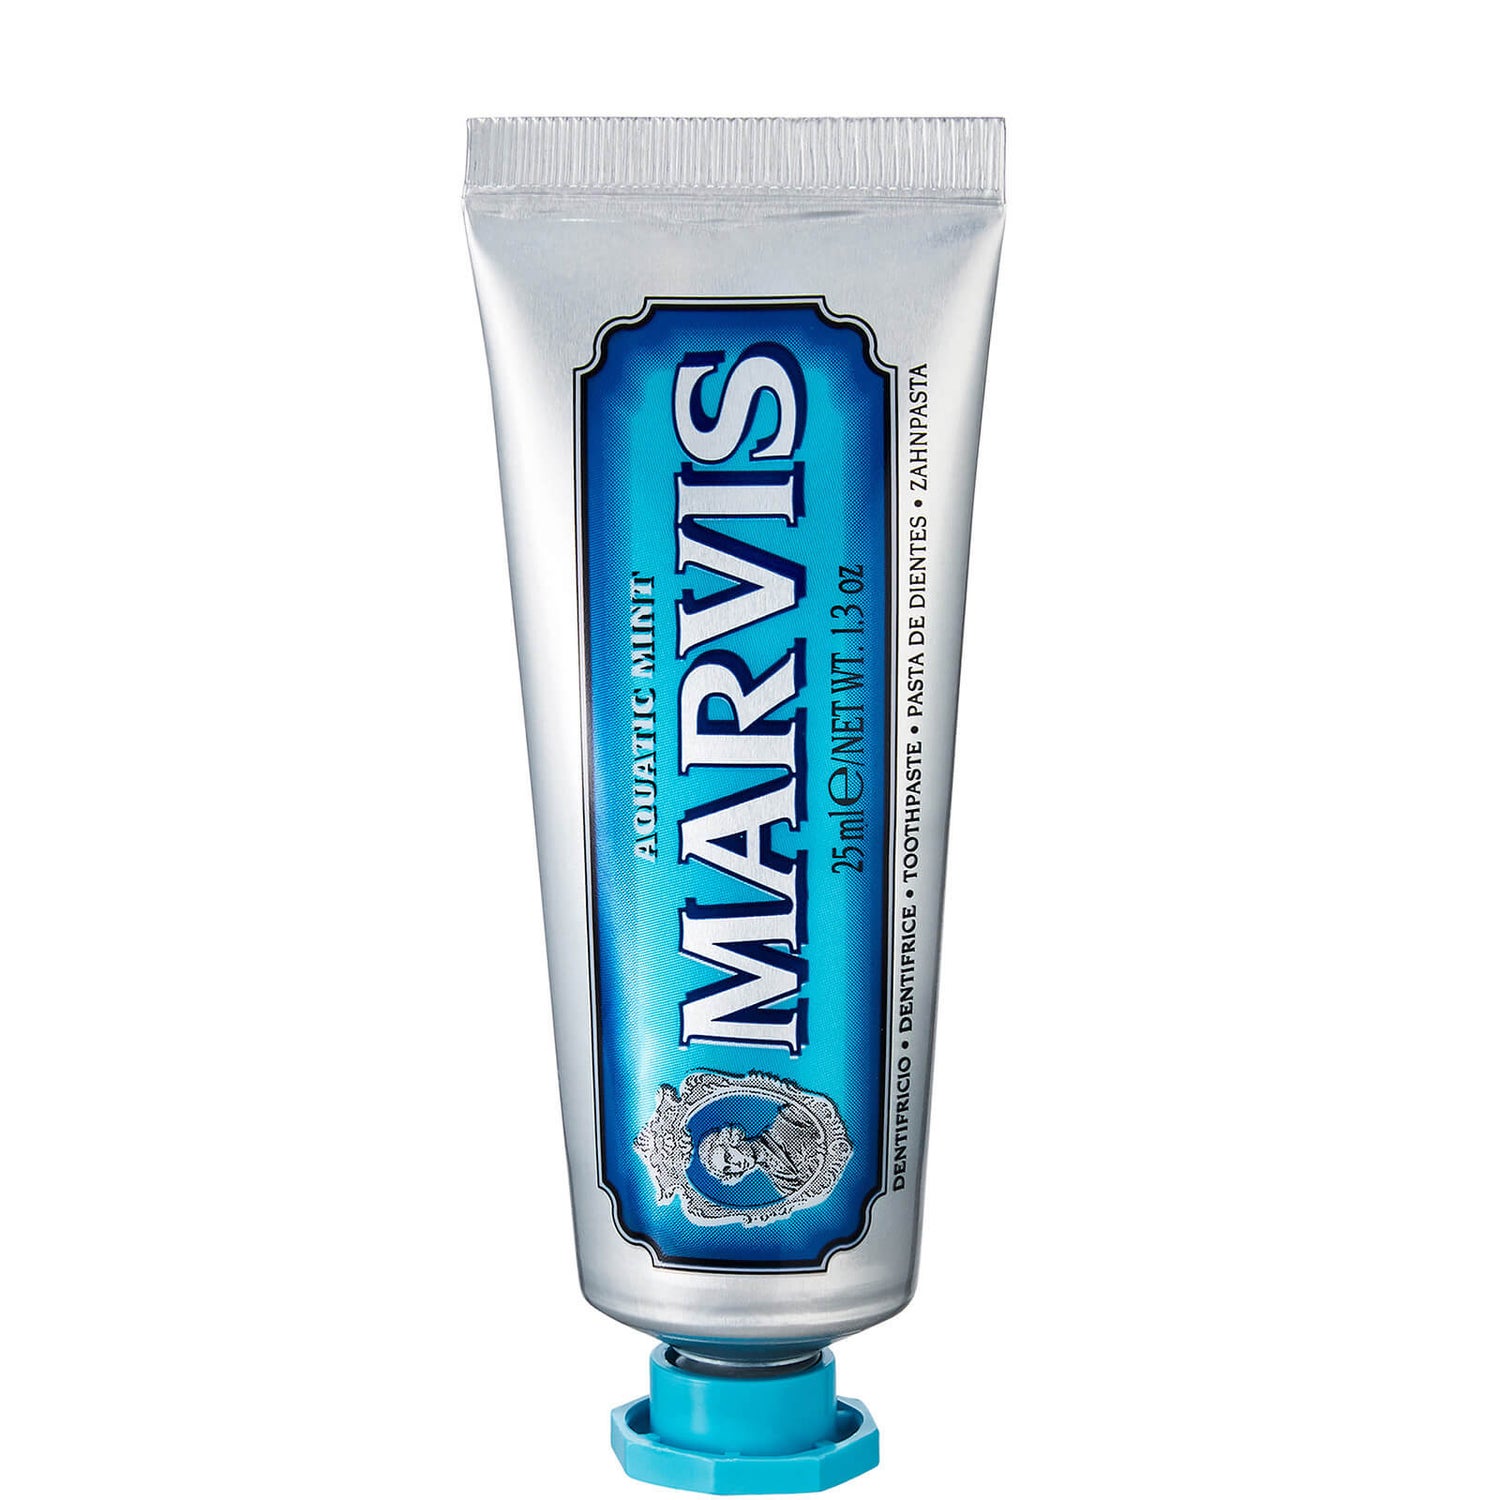 Marvis Travel Aquatic Mint Toothpaste